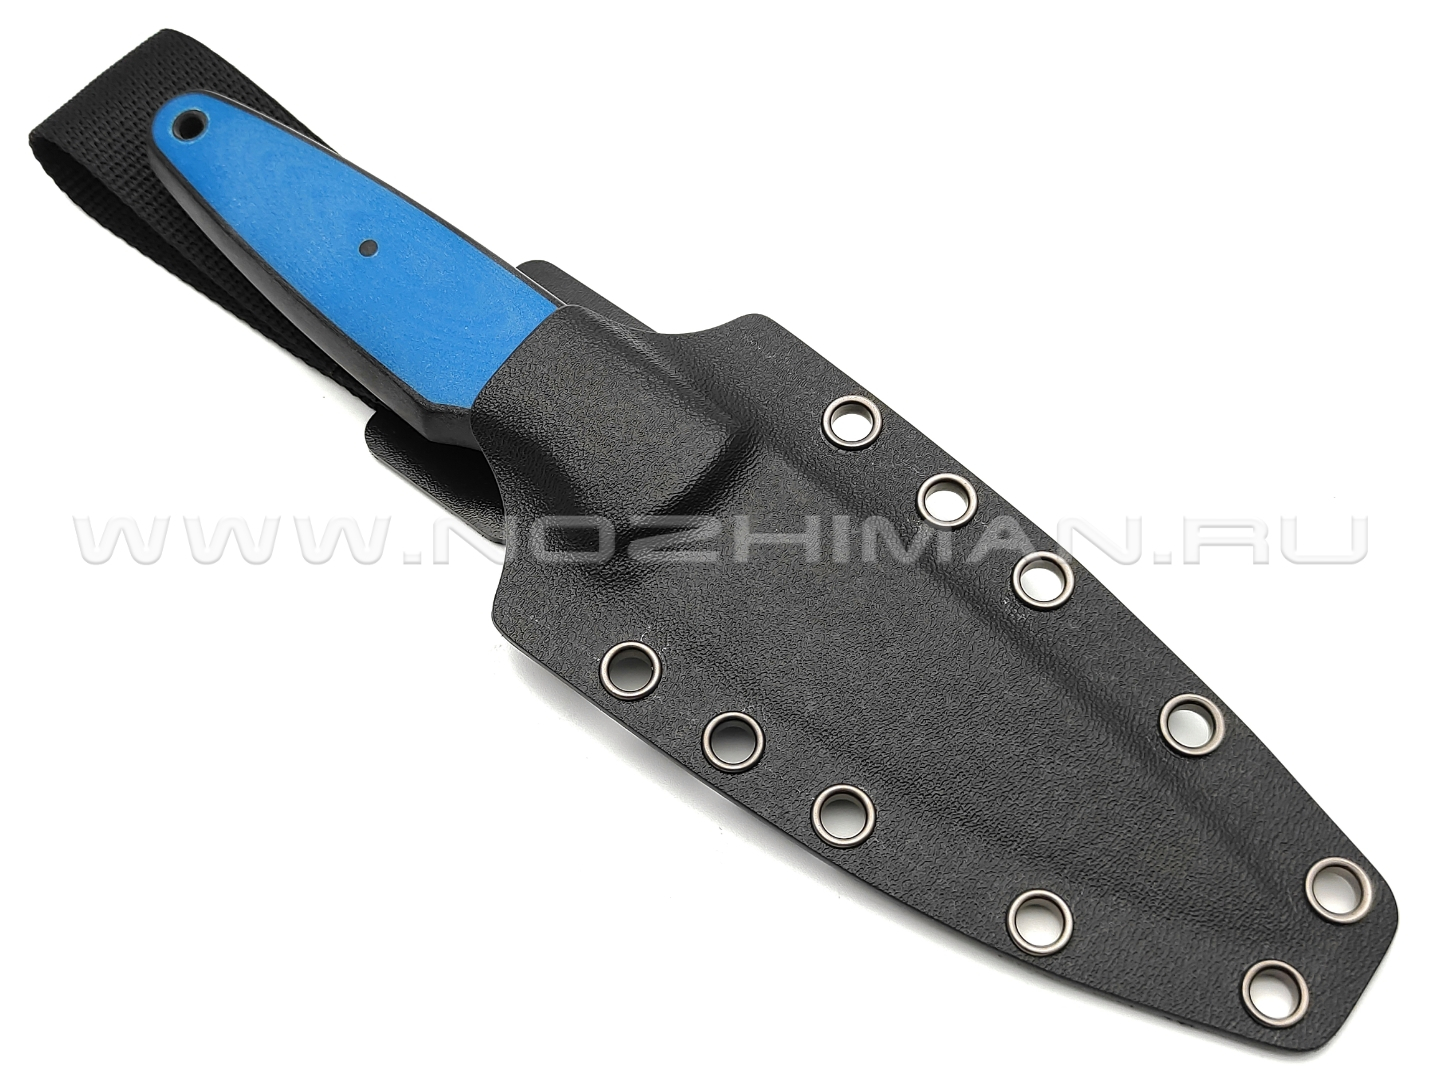 Apus Knives нож Скин-Ду Limited Edition сталь K110, рукоять G10 black & blue